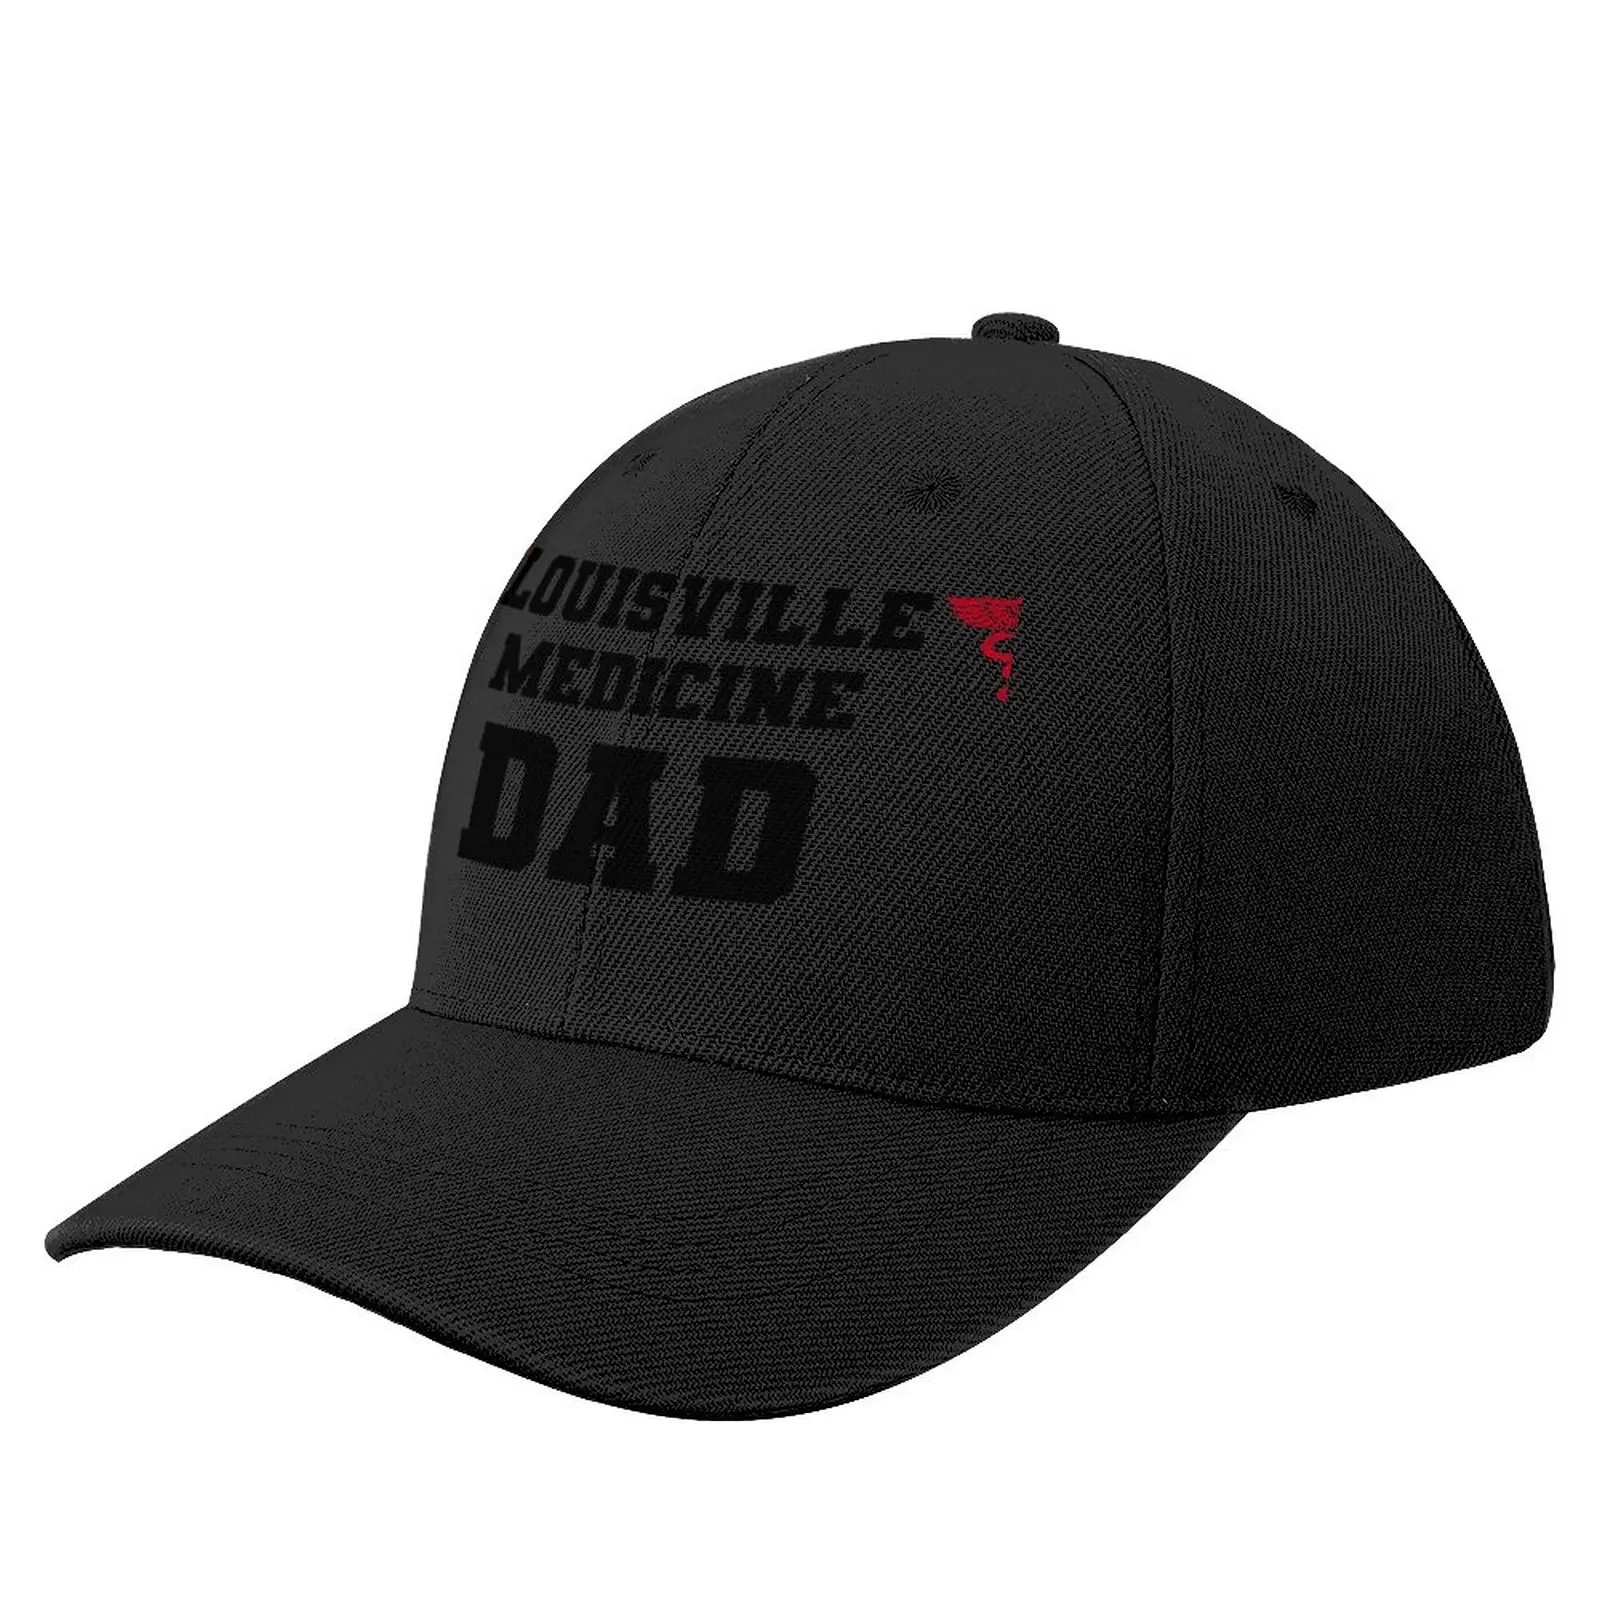 

Louisville Medicine Dad Baseball Cap Trucker Cap Hip Hop Christmas Hats Hat Luxury Brand Boy Child Hat Women's